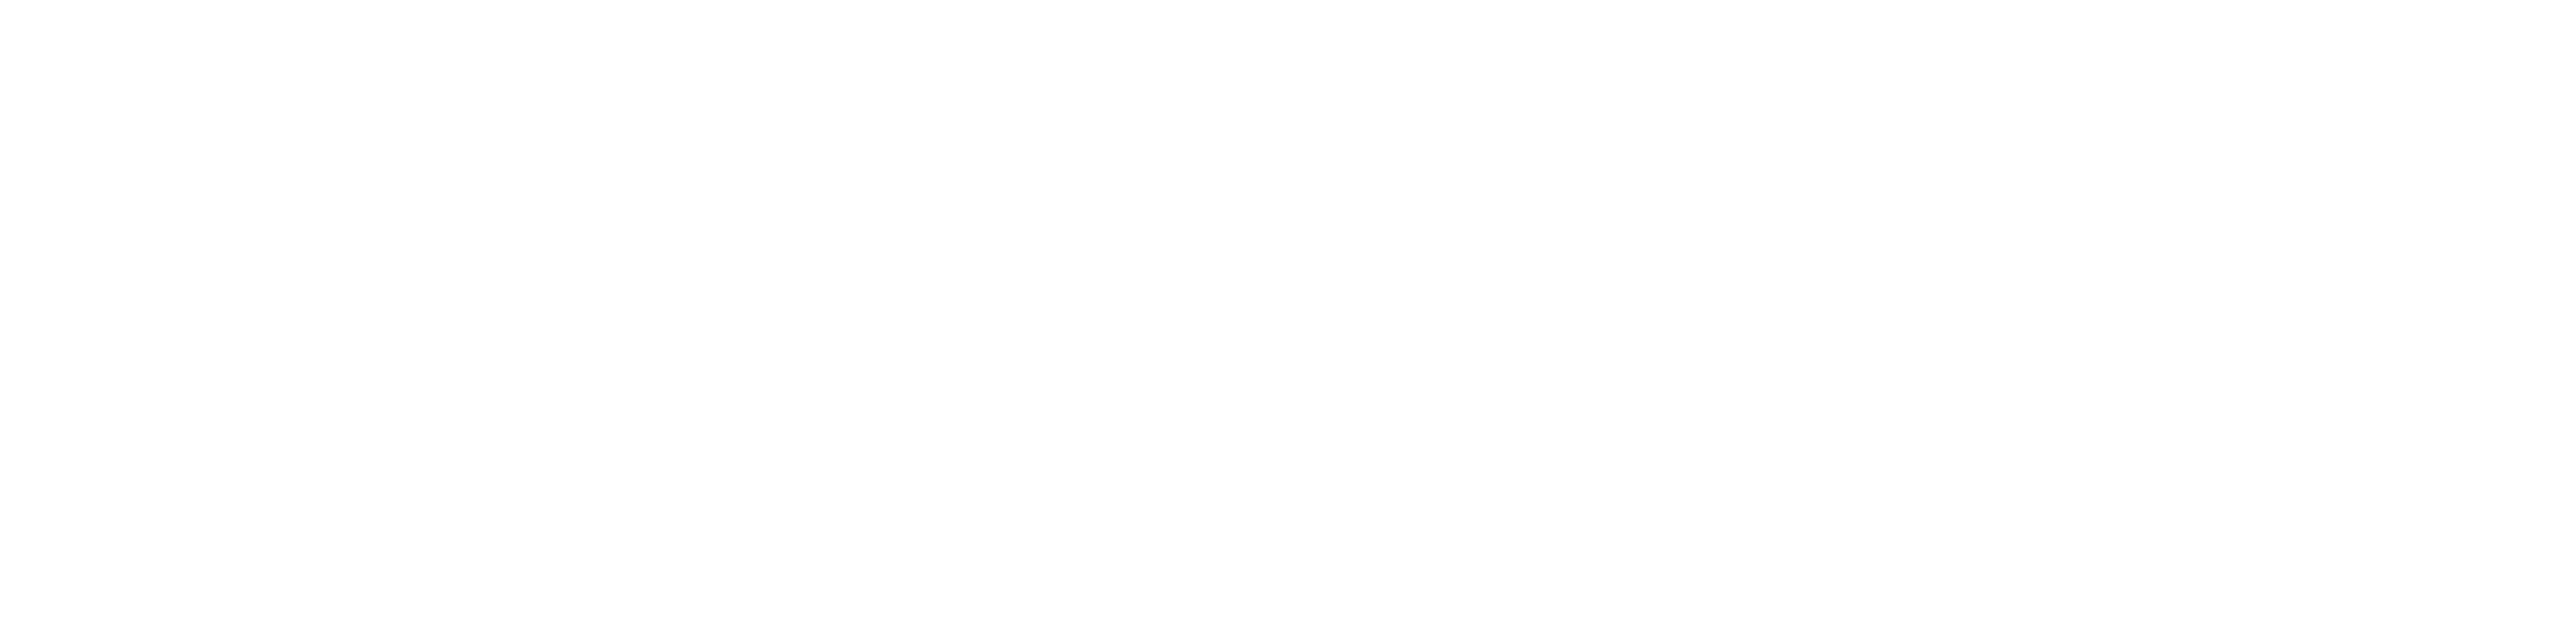 Compass Lacrosse_Wordmark_White